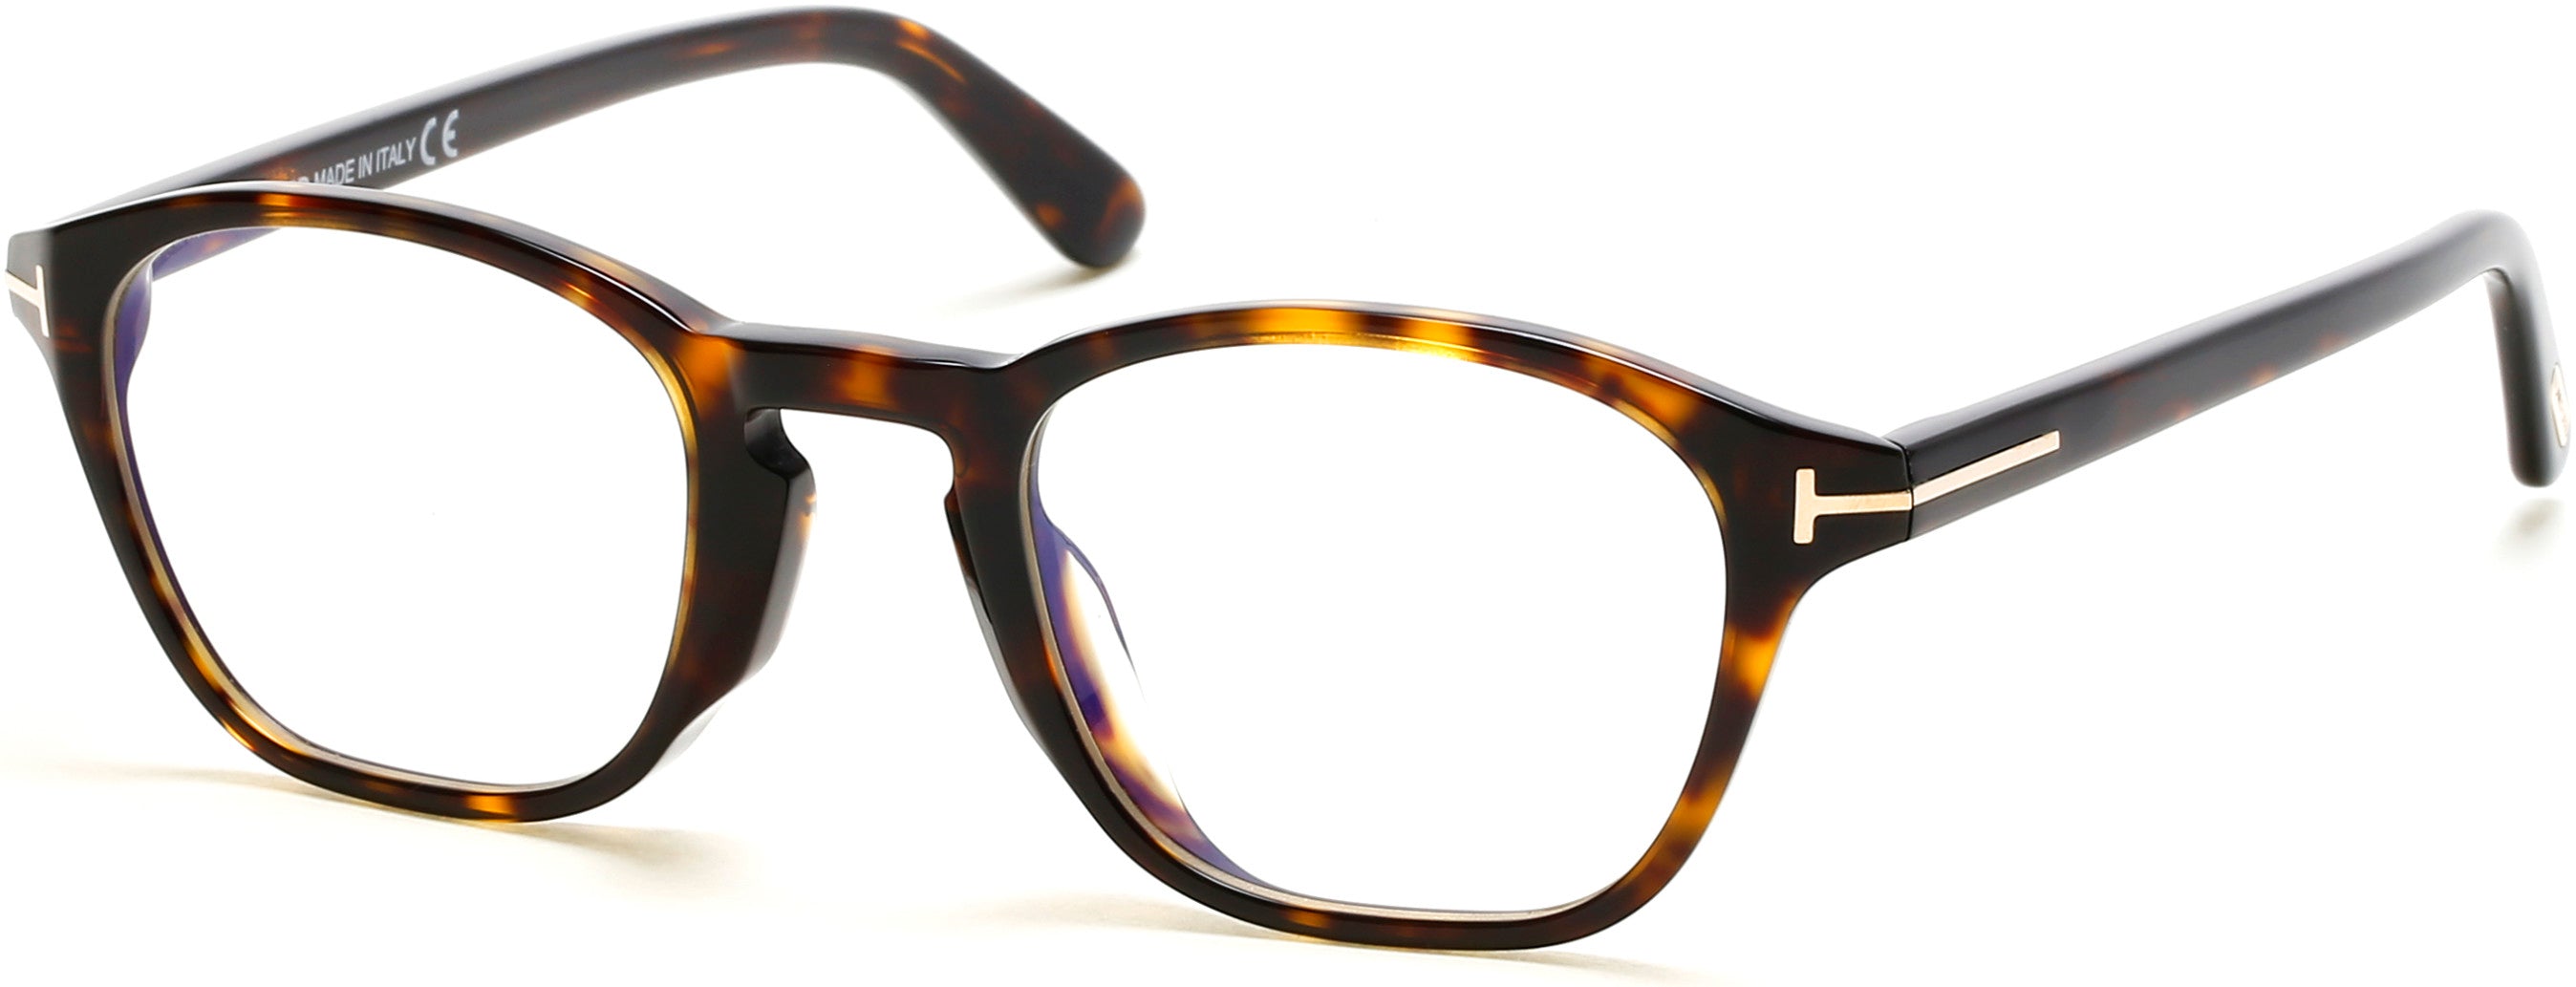 Tom Ford FT5591-D-B Geometric Eyeglasses 052-052 - Shiny Classic Dark Havana, Shiny Rose Gold "t" Logo/ Blue Block Lenses